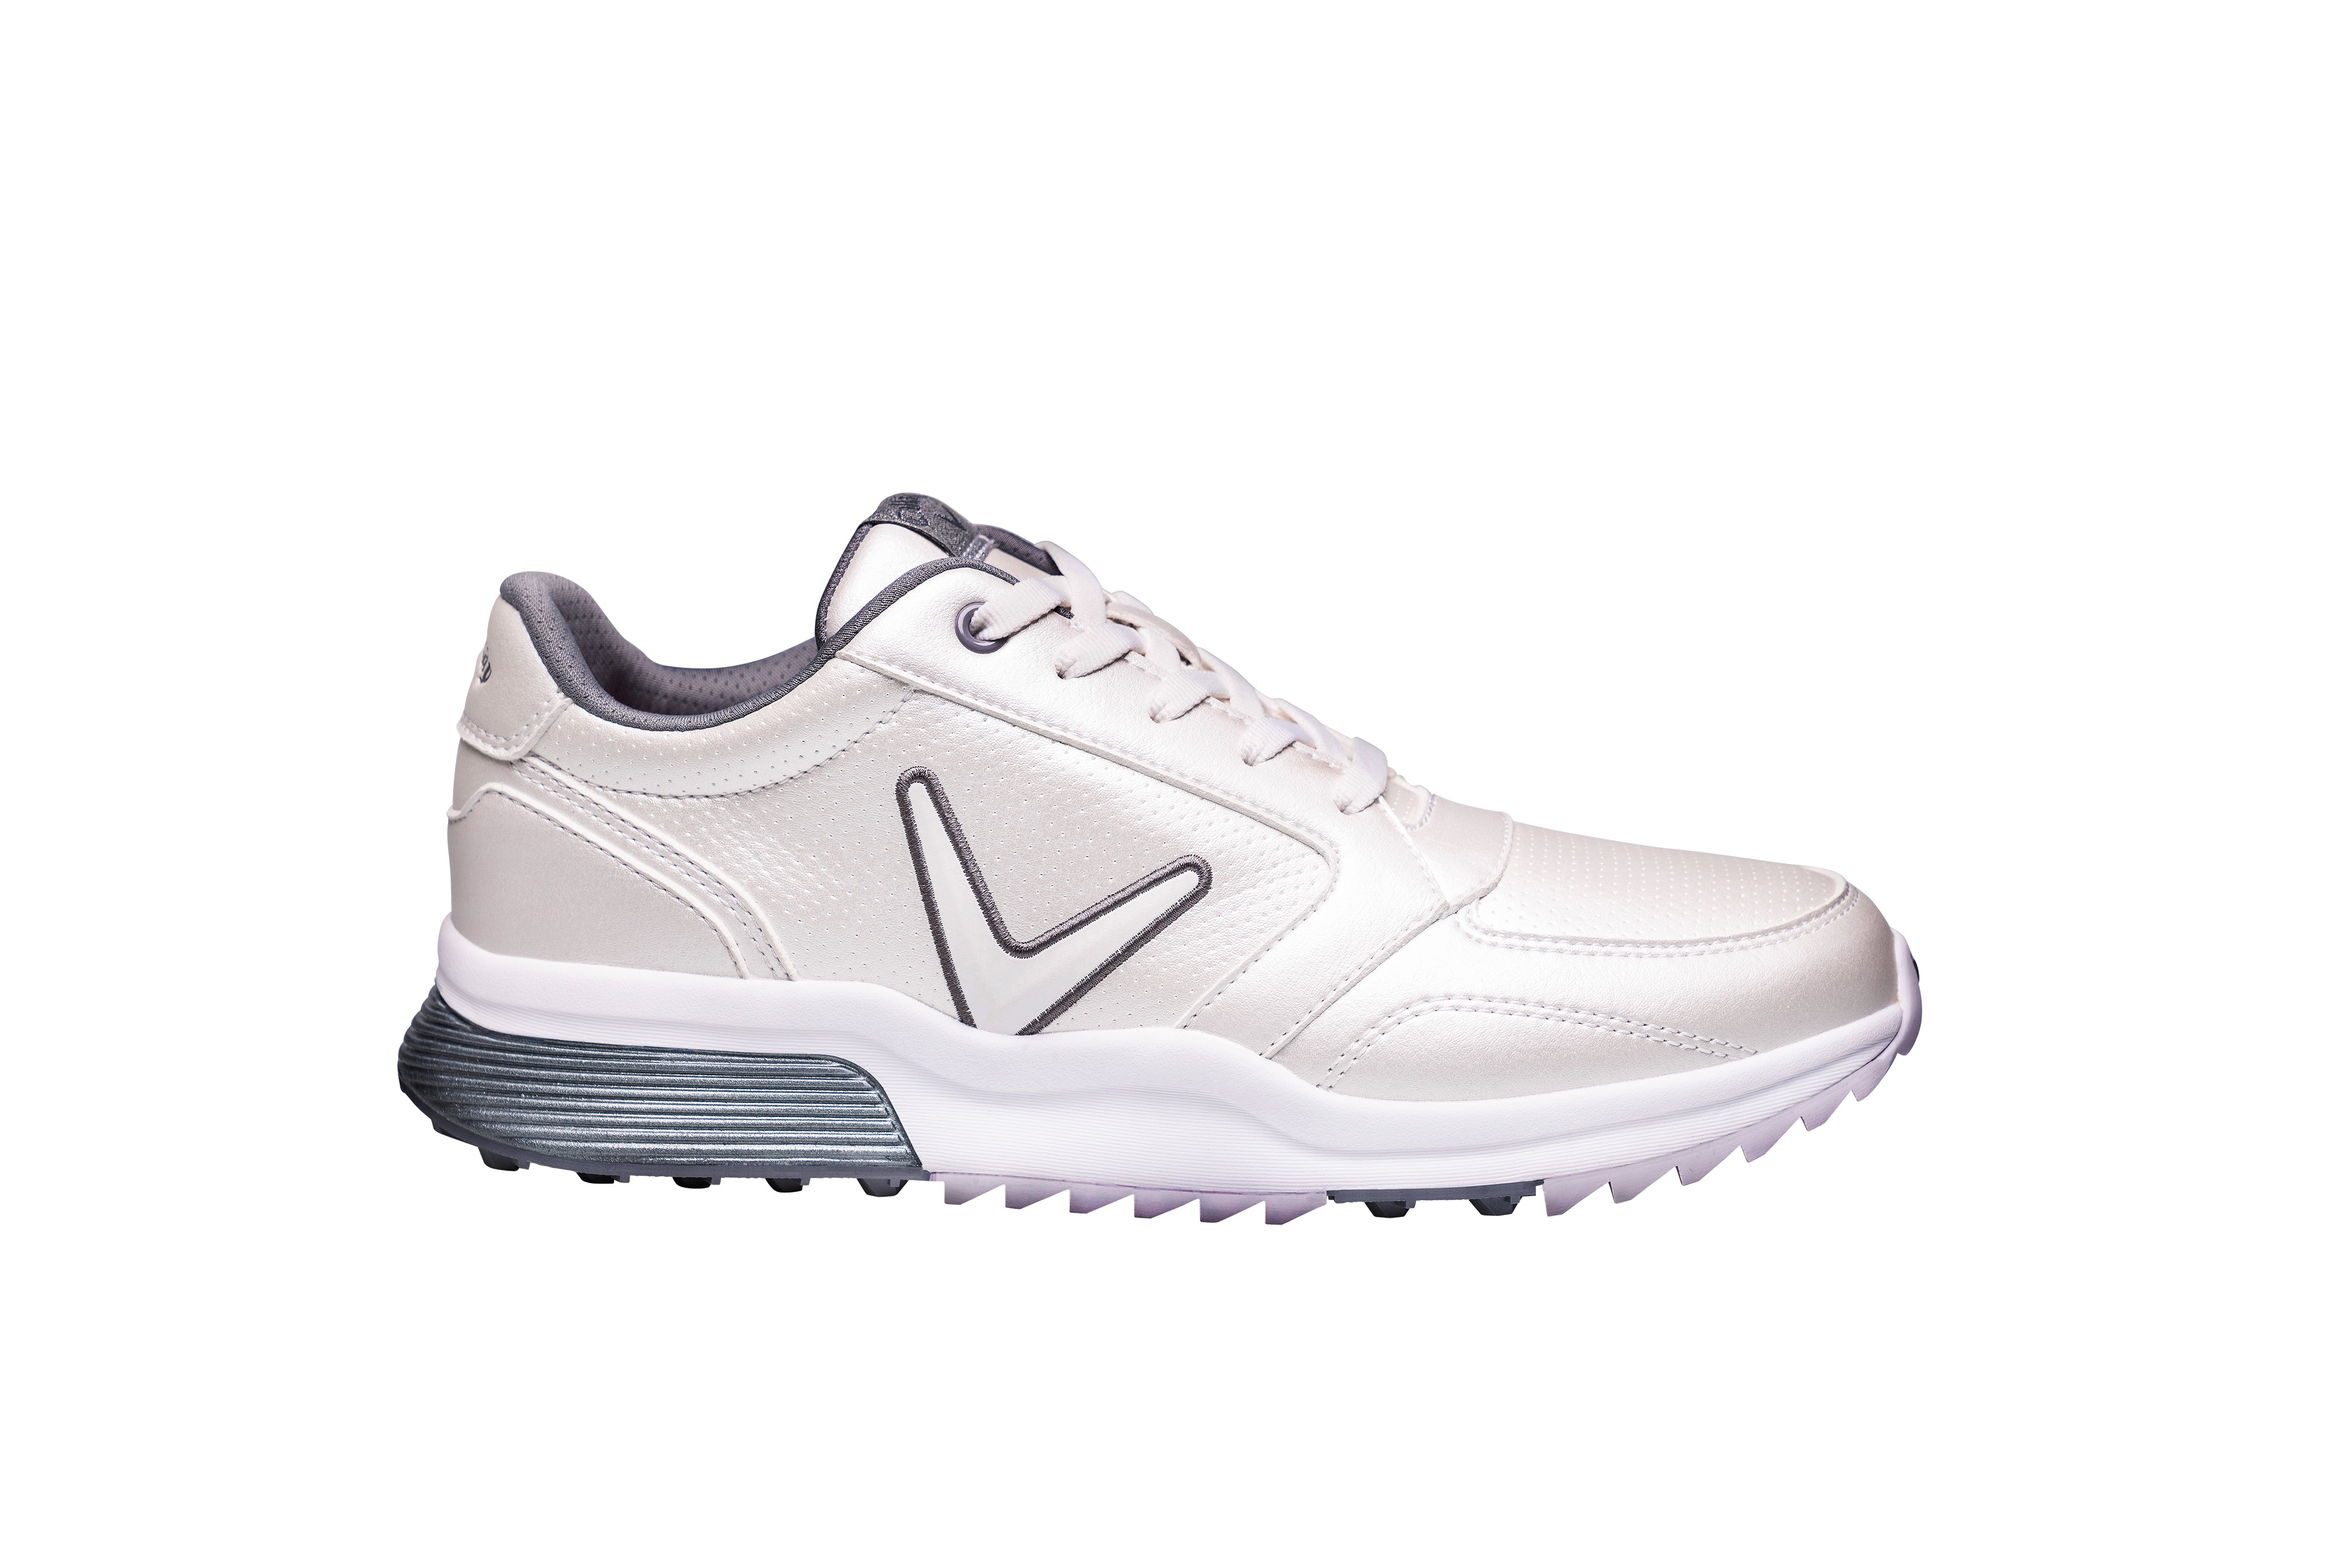 Callaway Aurora dámské golfové boty, perleťové/bílé, vel. 6 UK